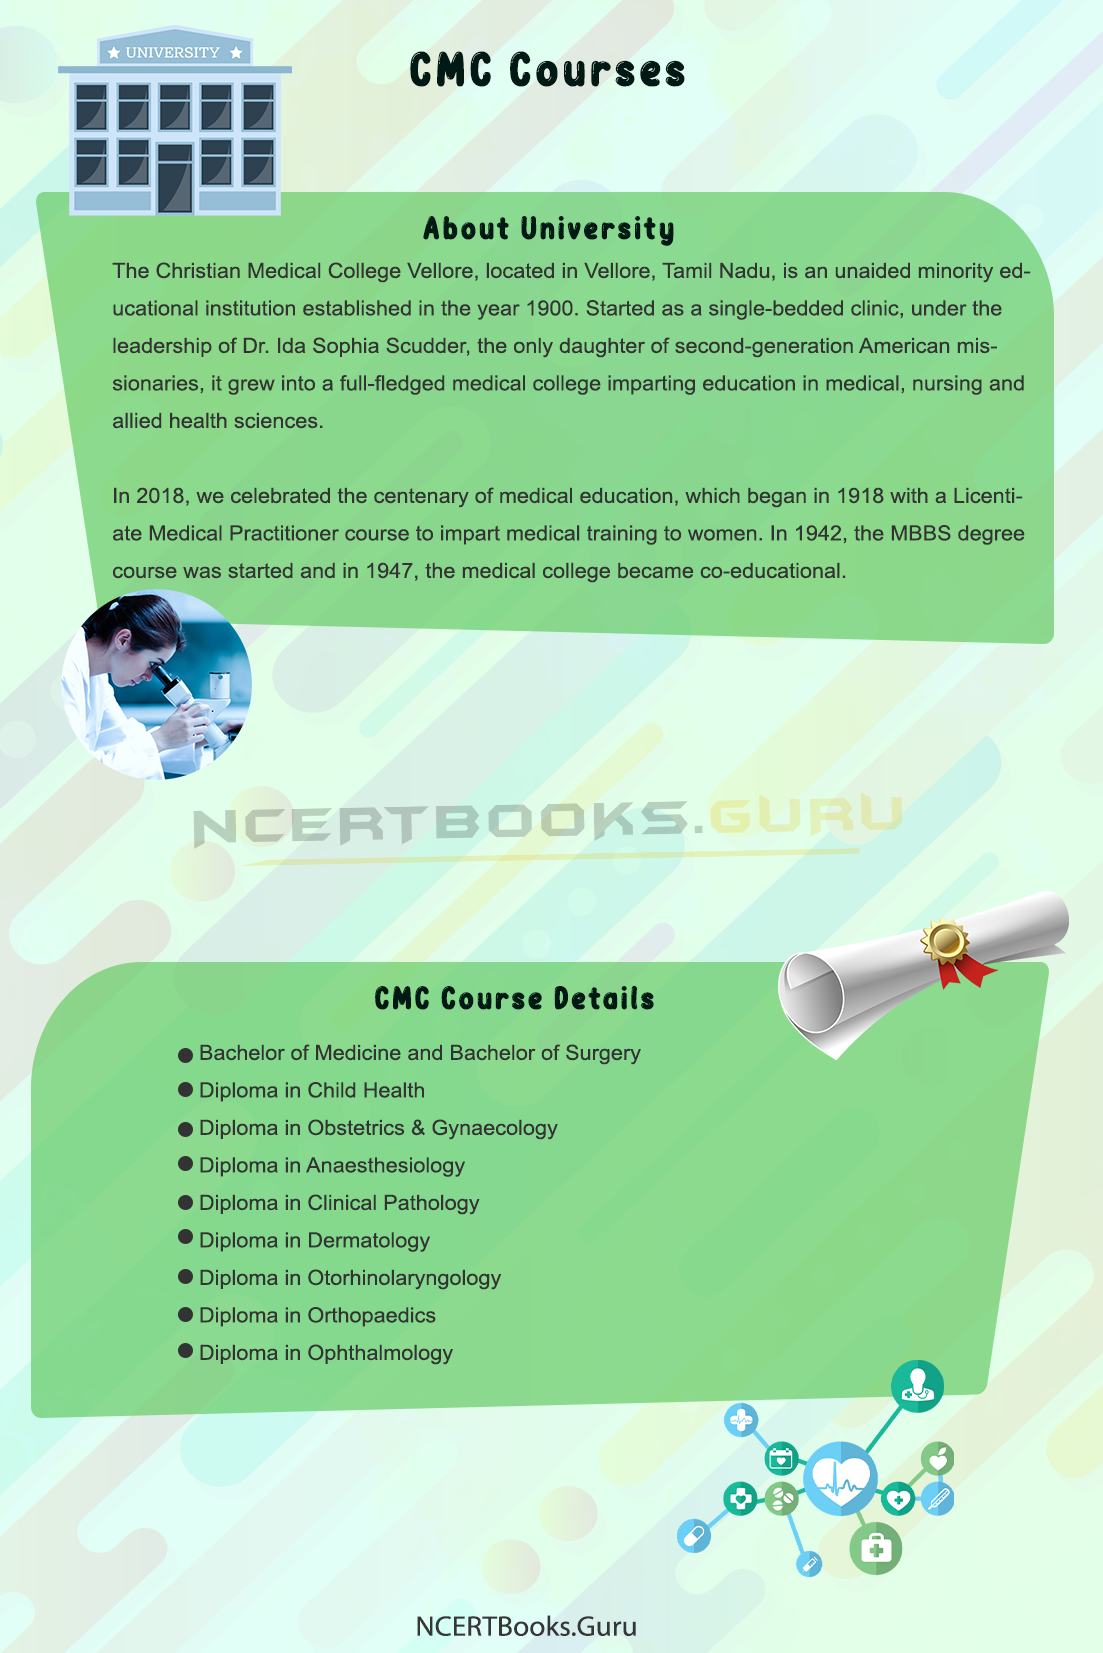 CMC Courses